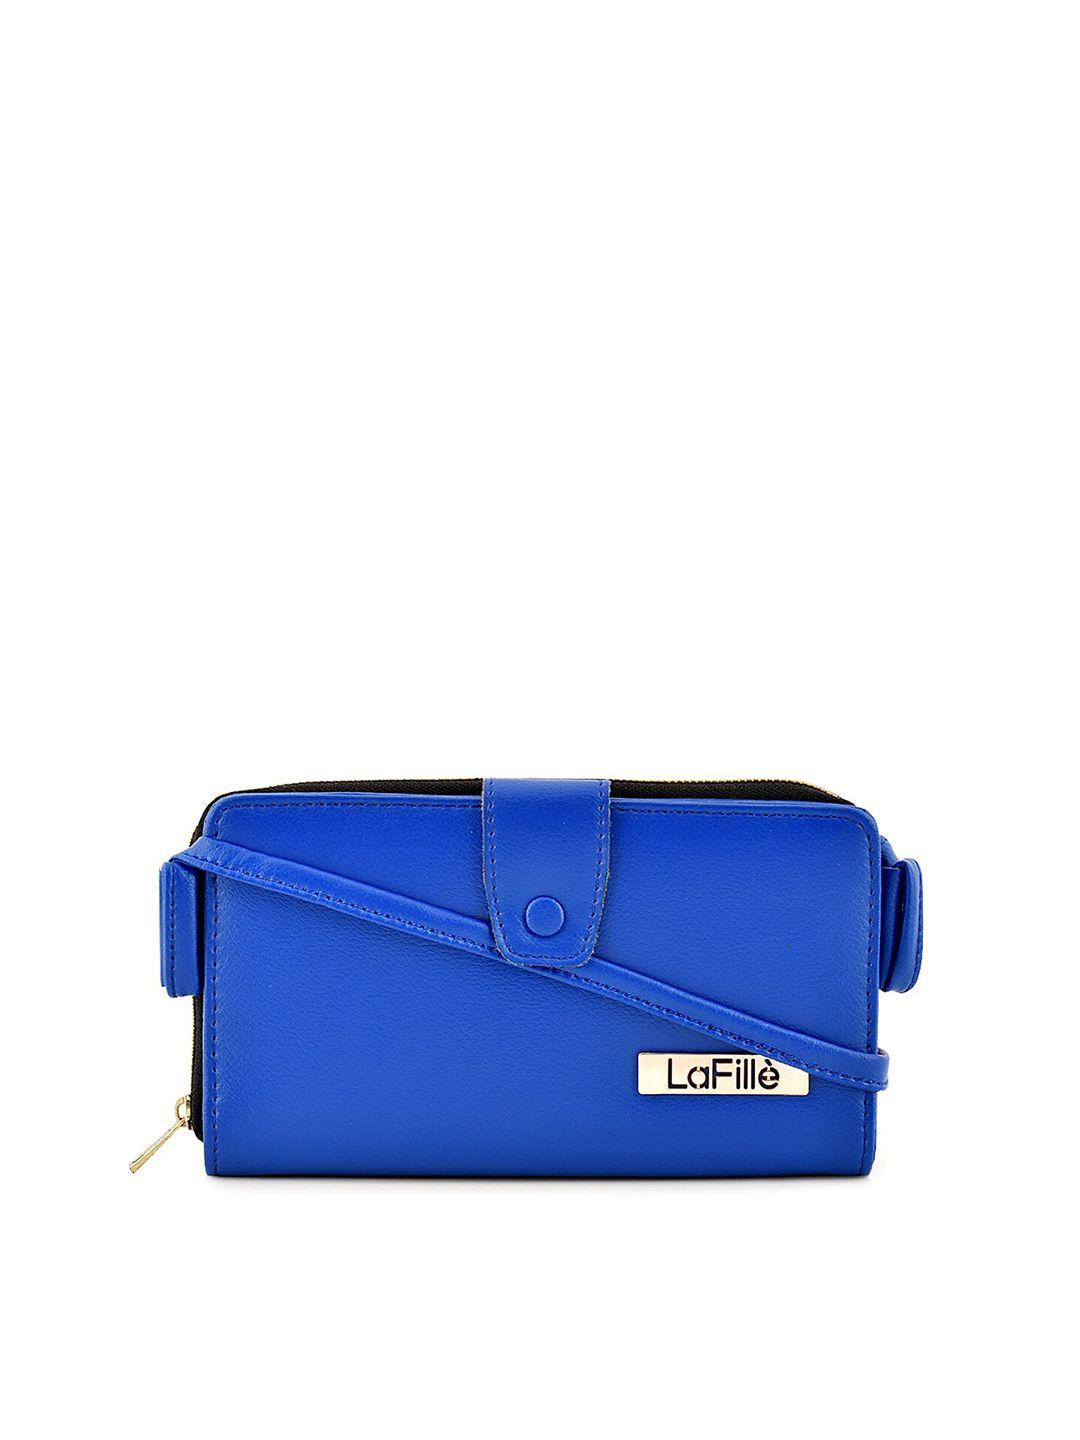 lafille woman blue purse clutch